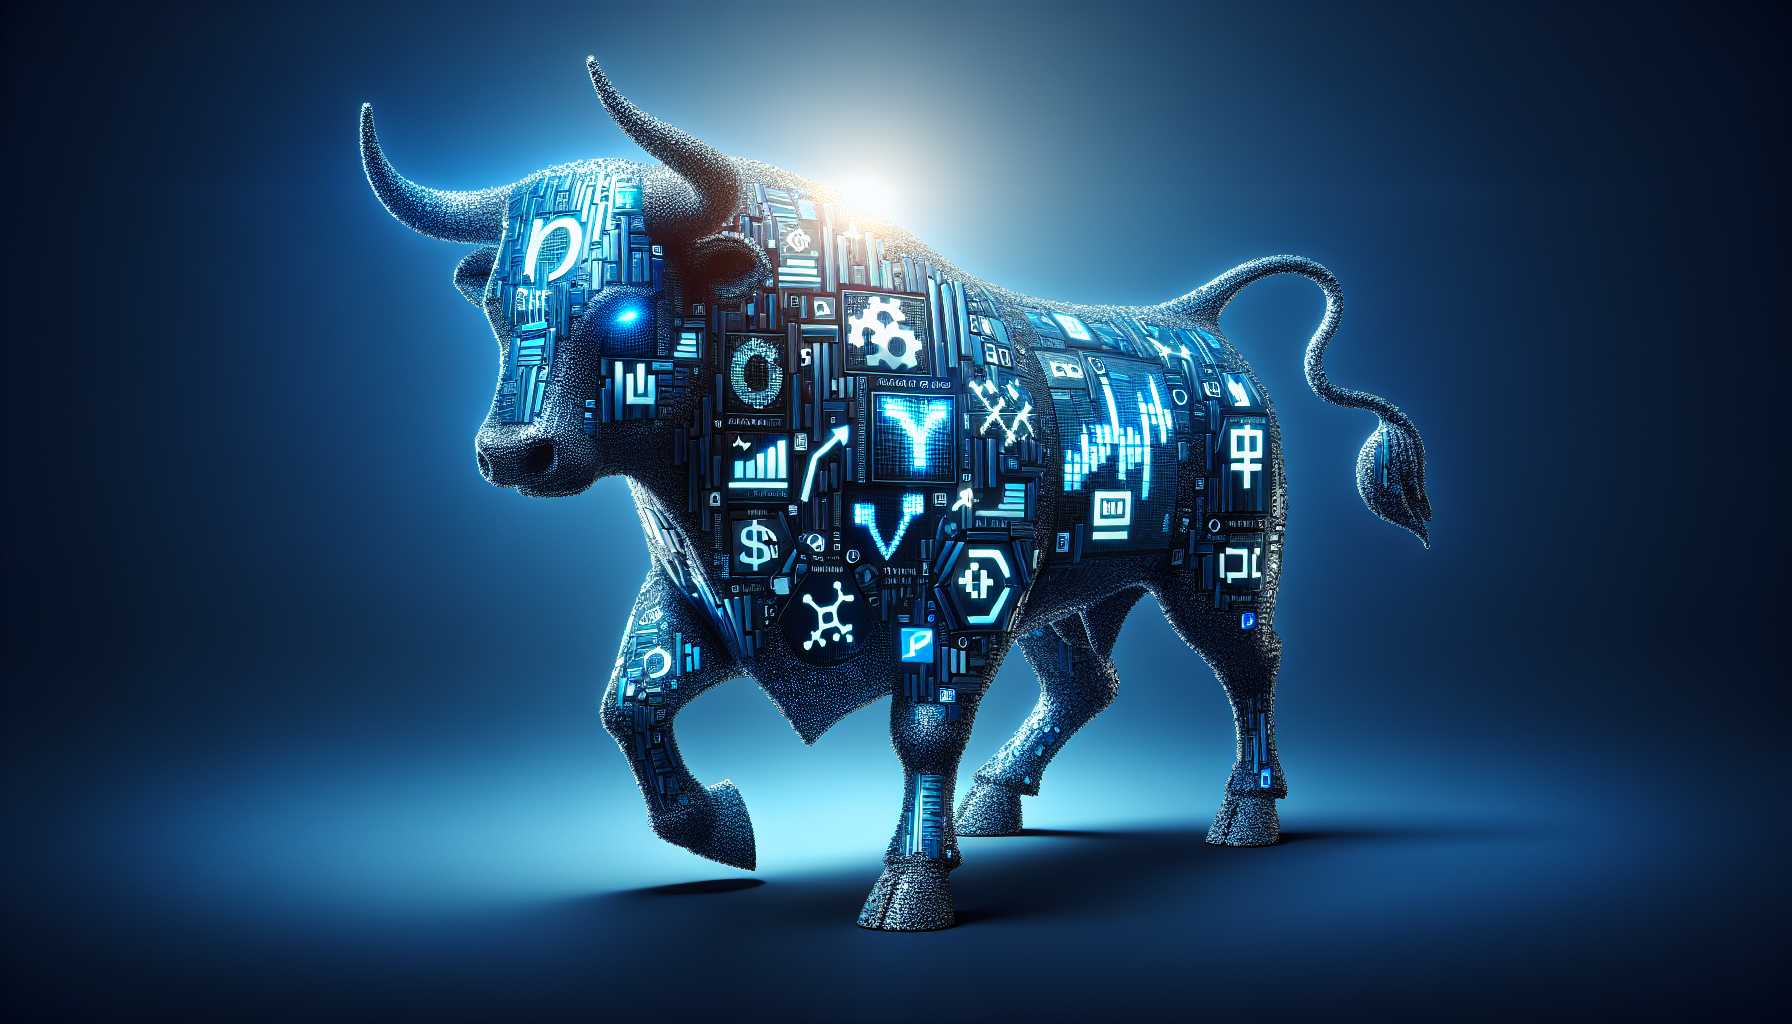 Bull in digital form representing Bull Market with tech symbols